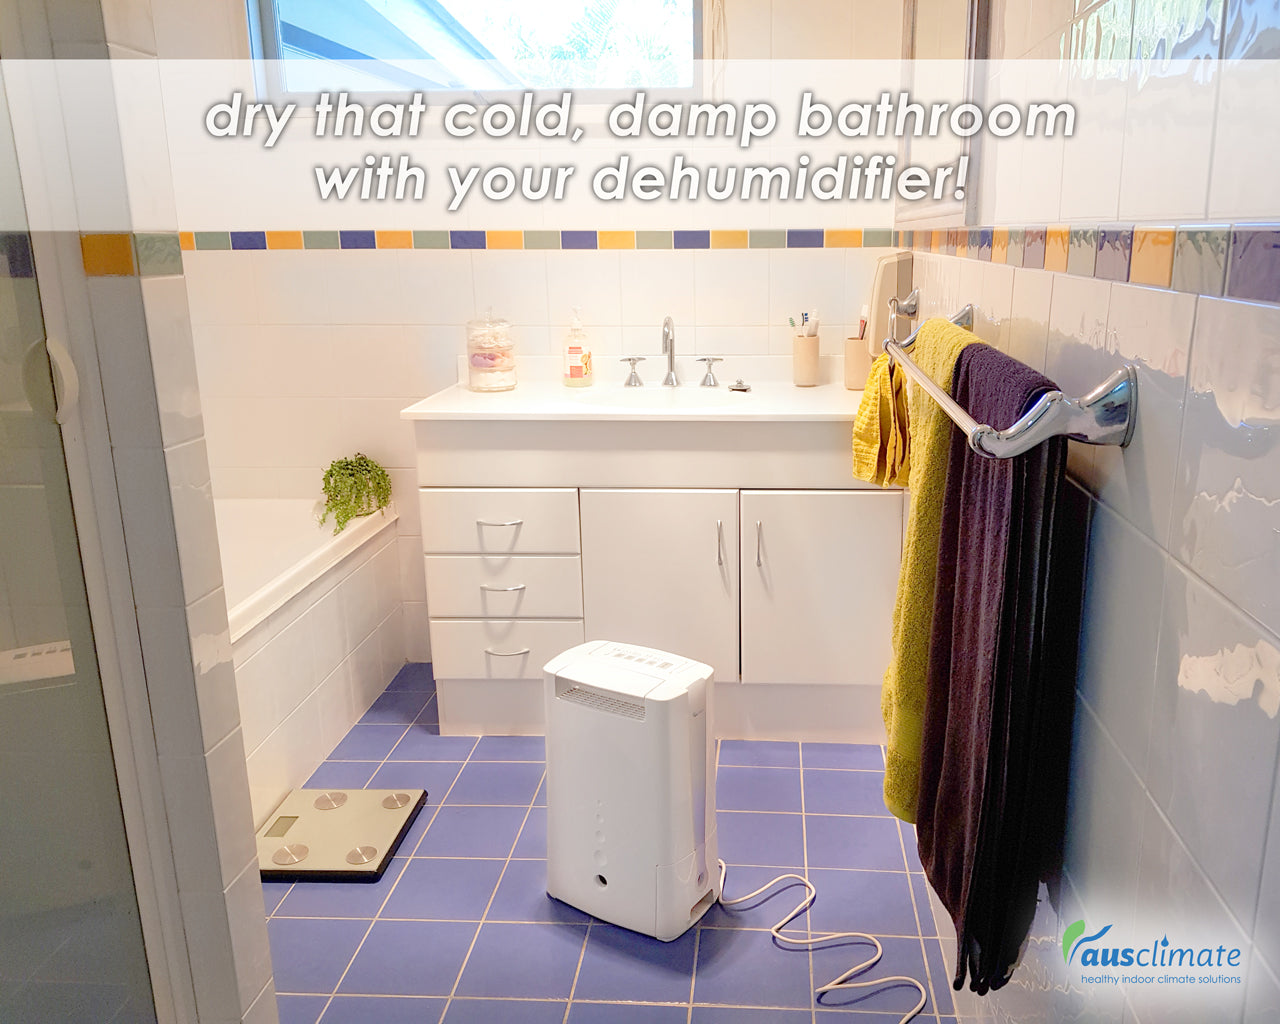 a bathroom with a dehumidifier